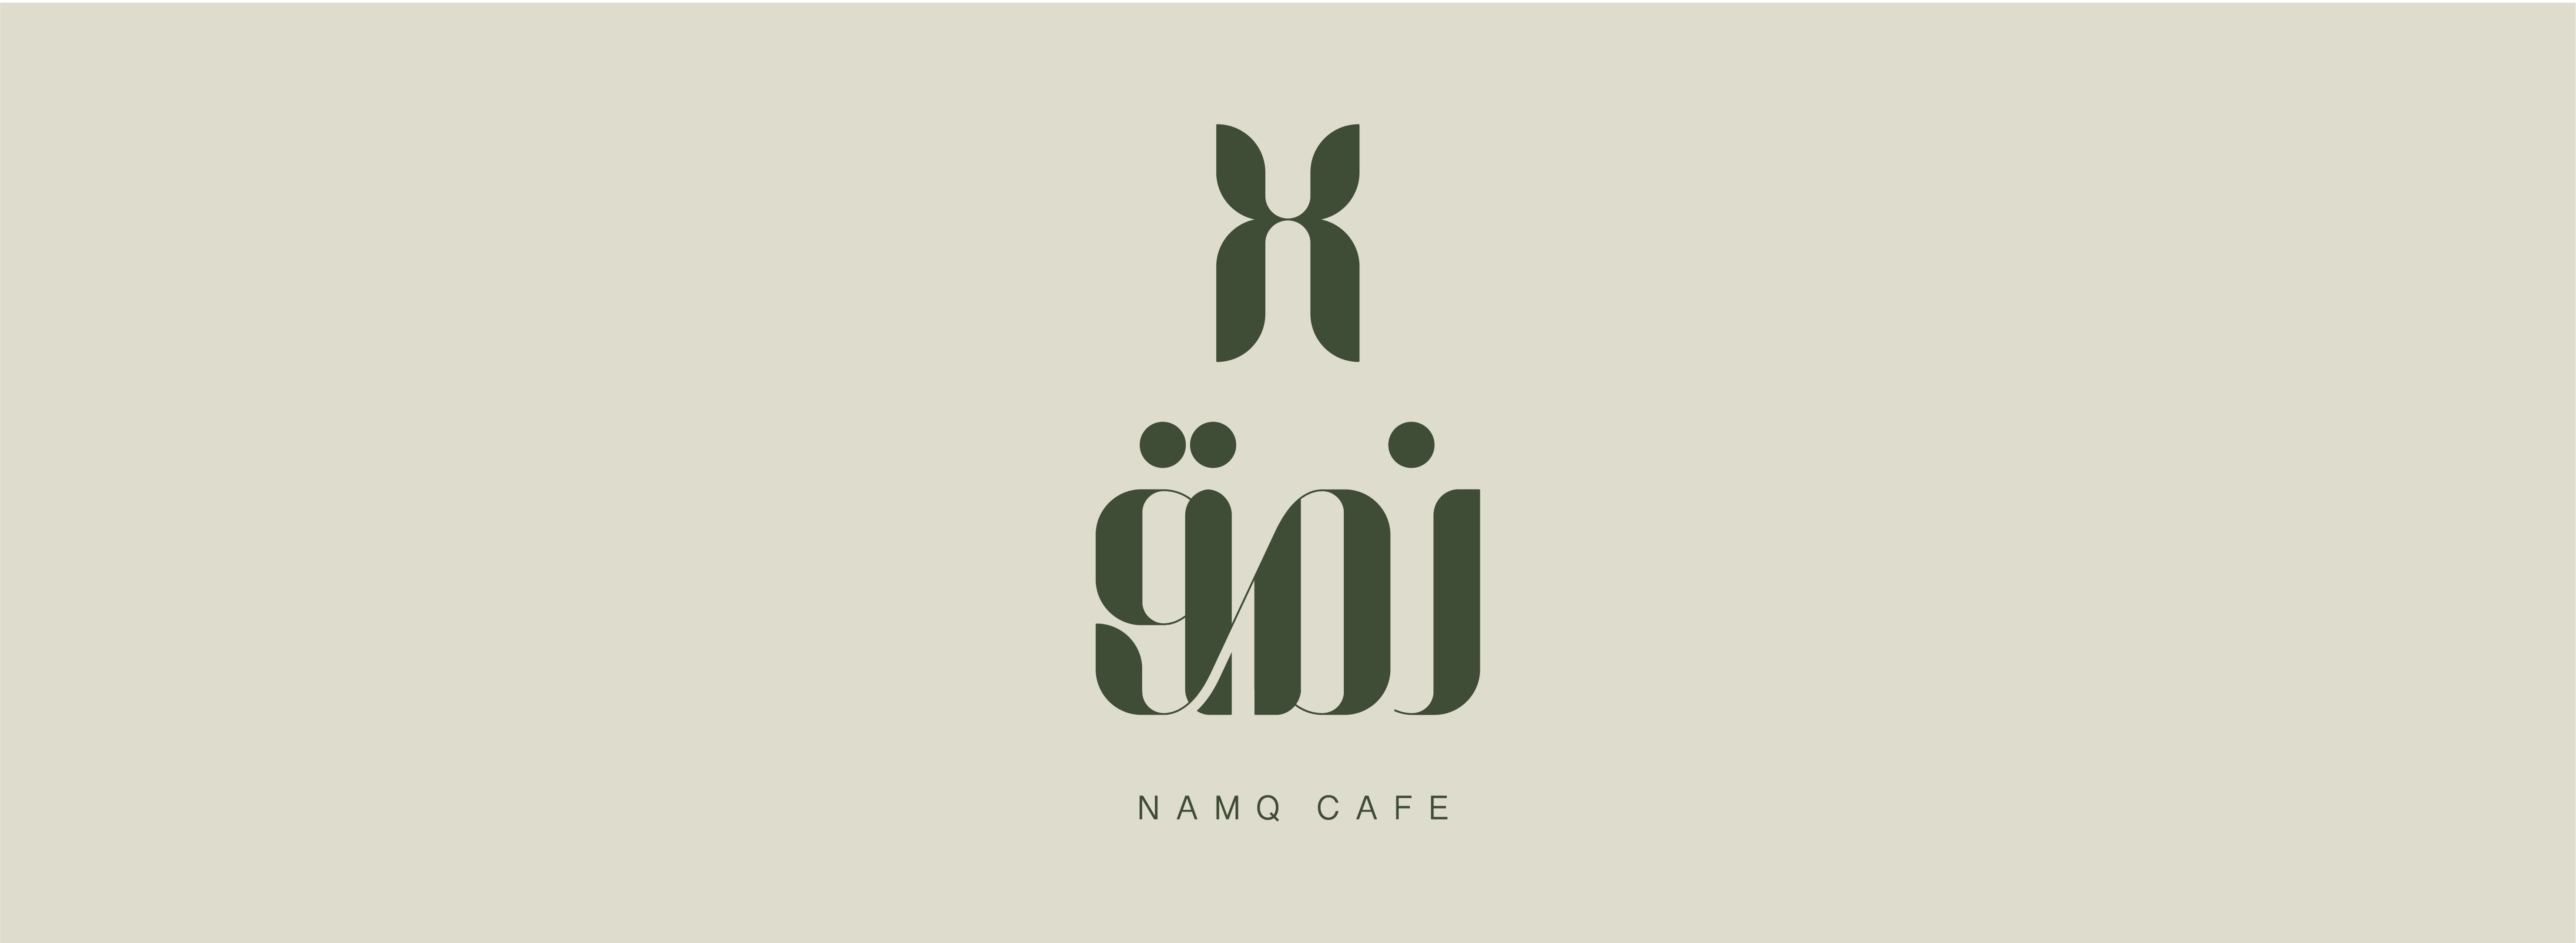 BREEHANT / NAMQ CAFE